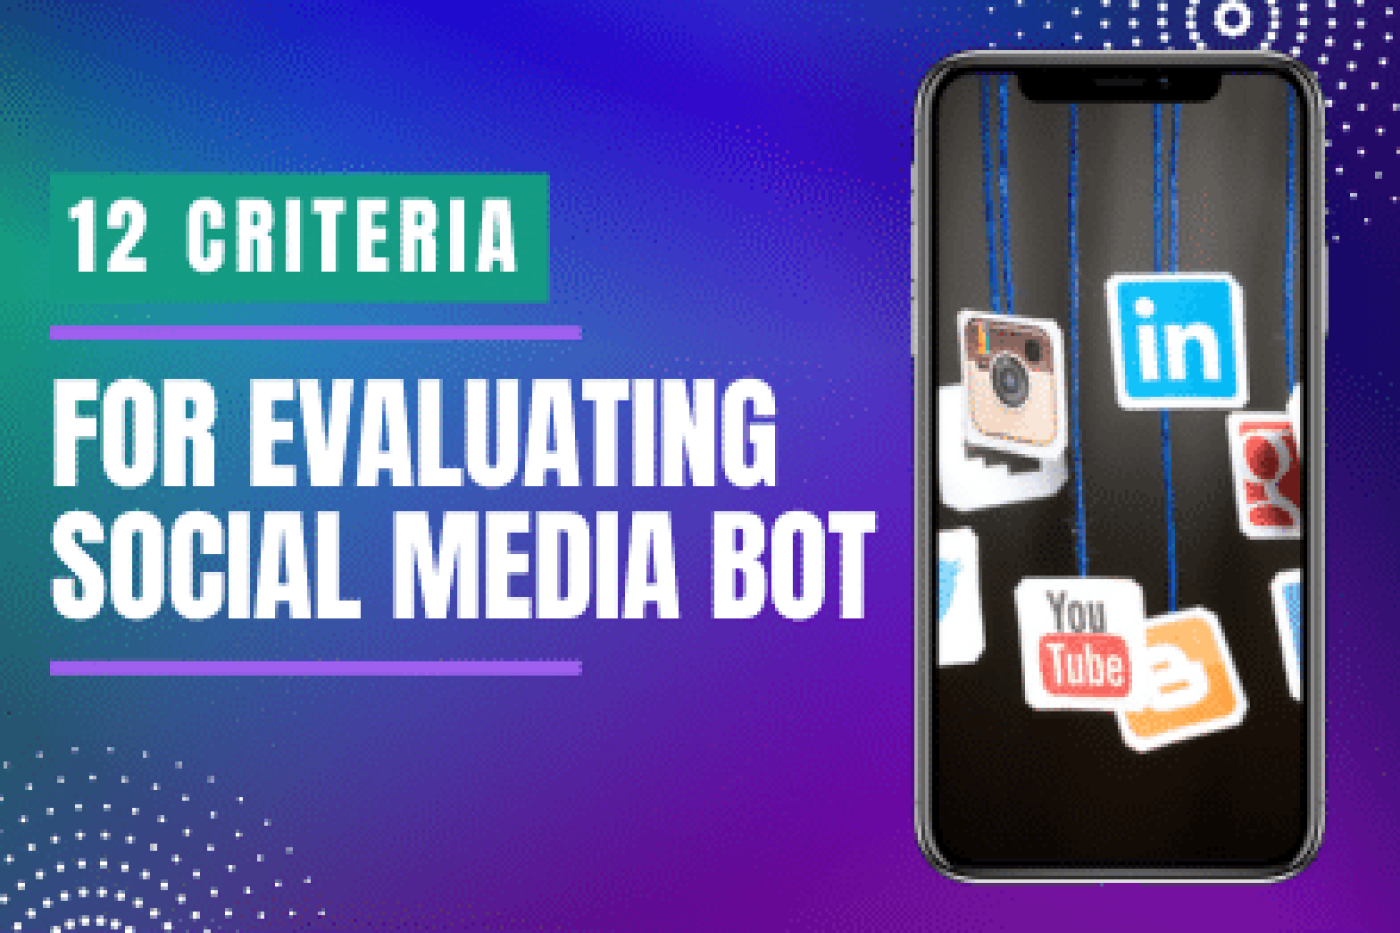 Bot Detection: 12 Criteria for Evaluating Social Media Bots